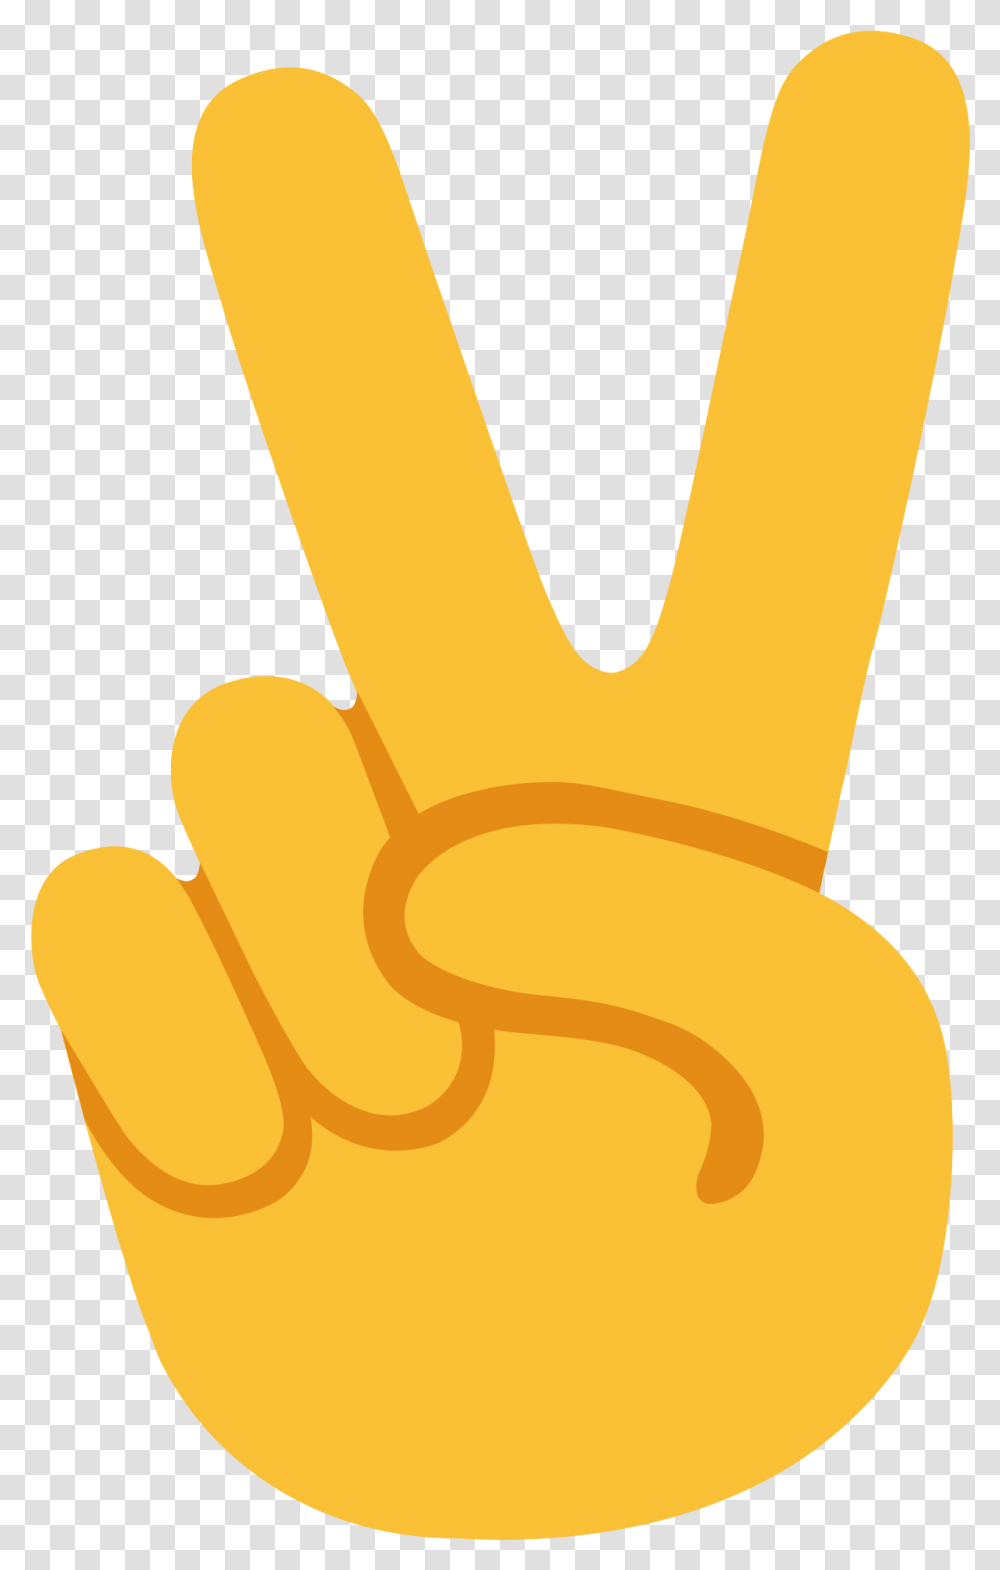 File U C Svg Wikimedia Commons Open Emoji Peace Sign, Hand, Crowd, Light, Finger Transparent Png